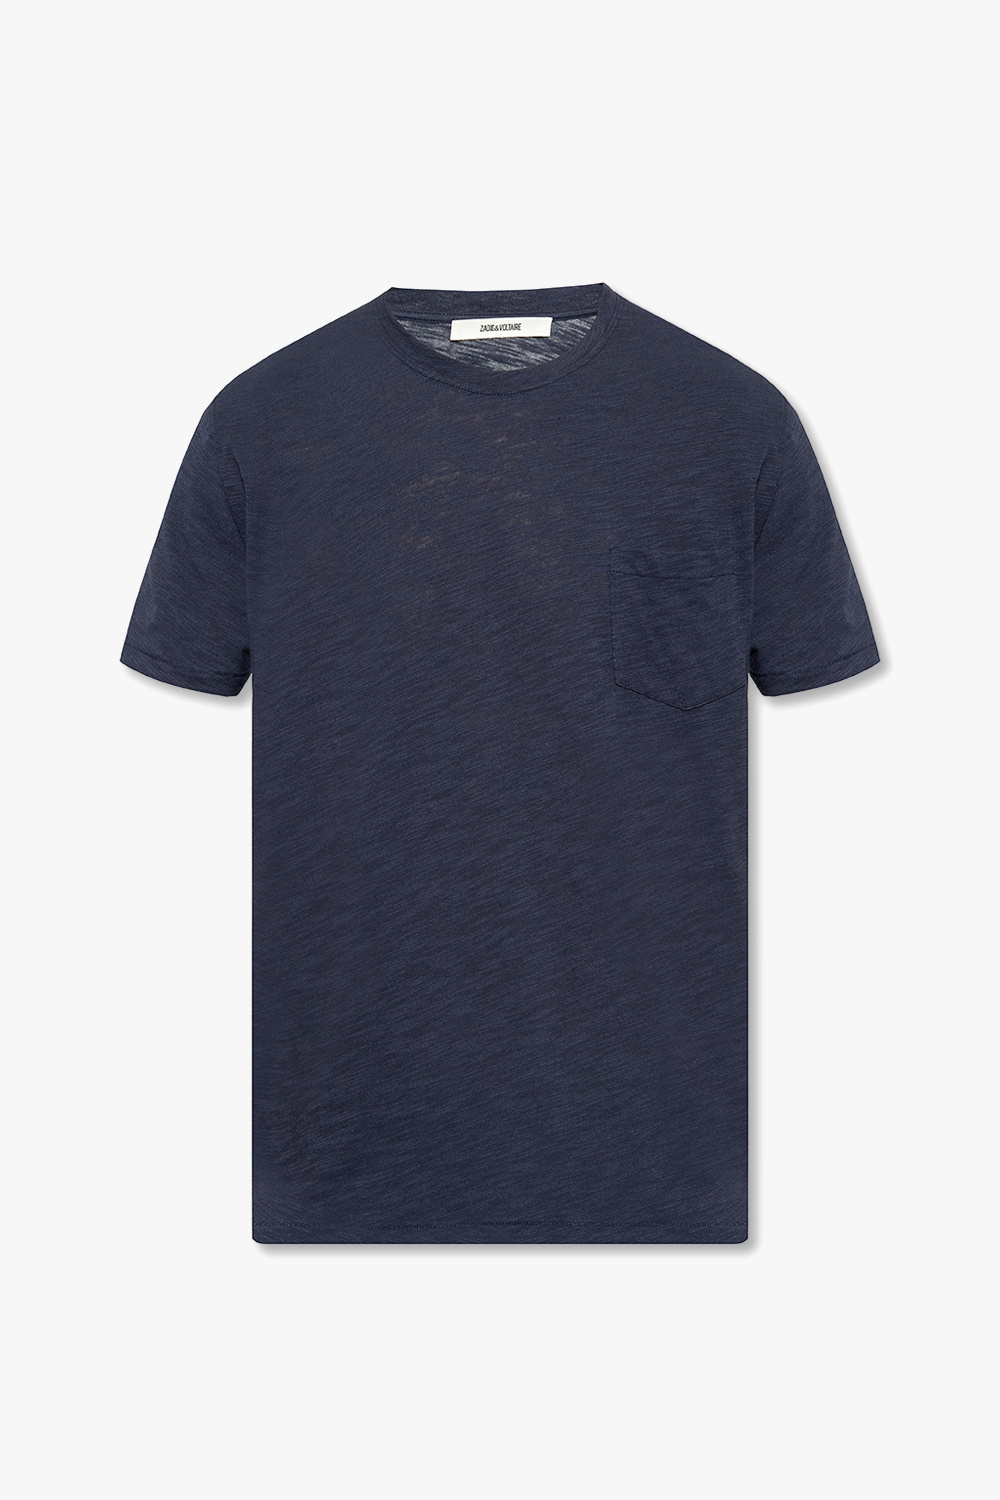 T-shirt Helly Hansen HP Racing azul preto ‘Stockholm’ T-shirt